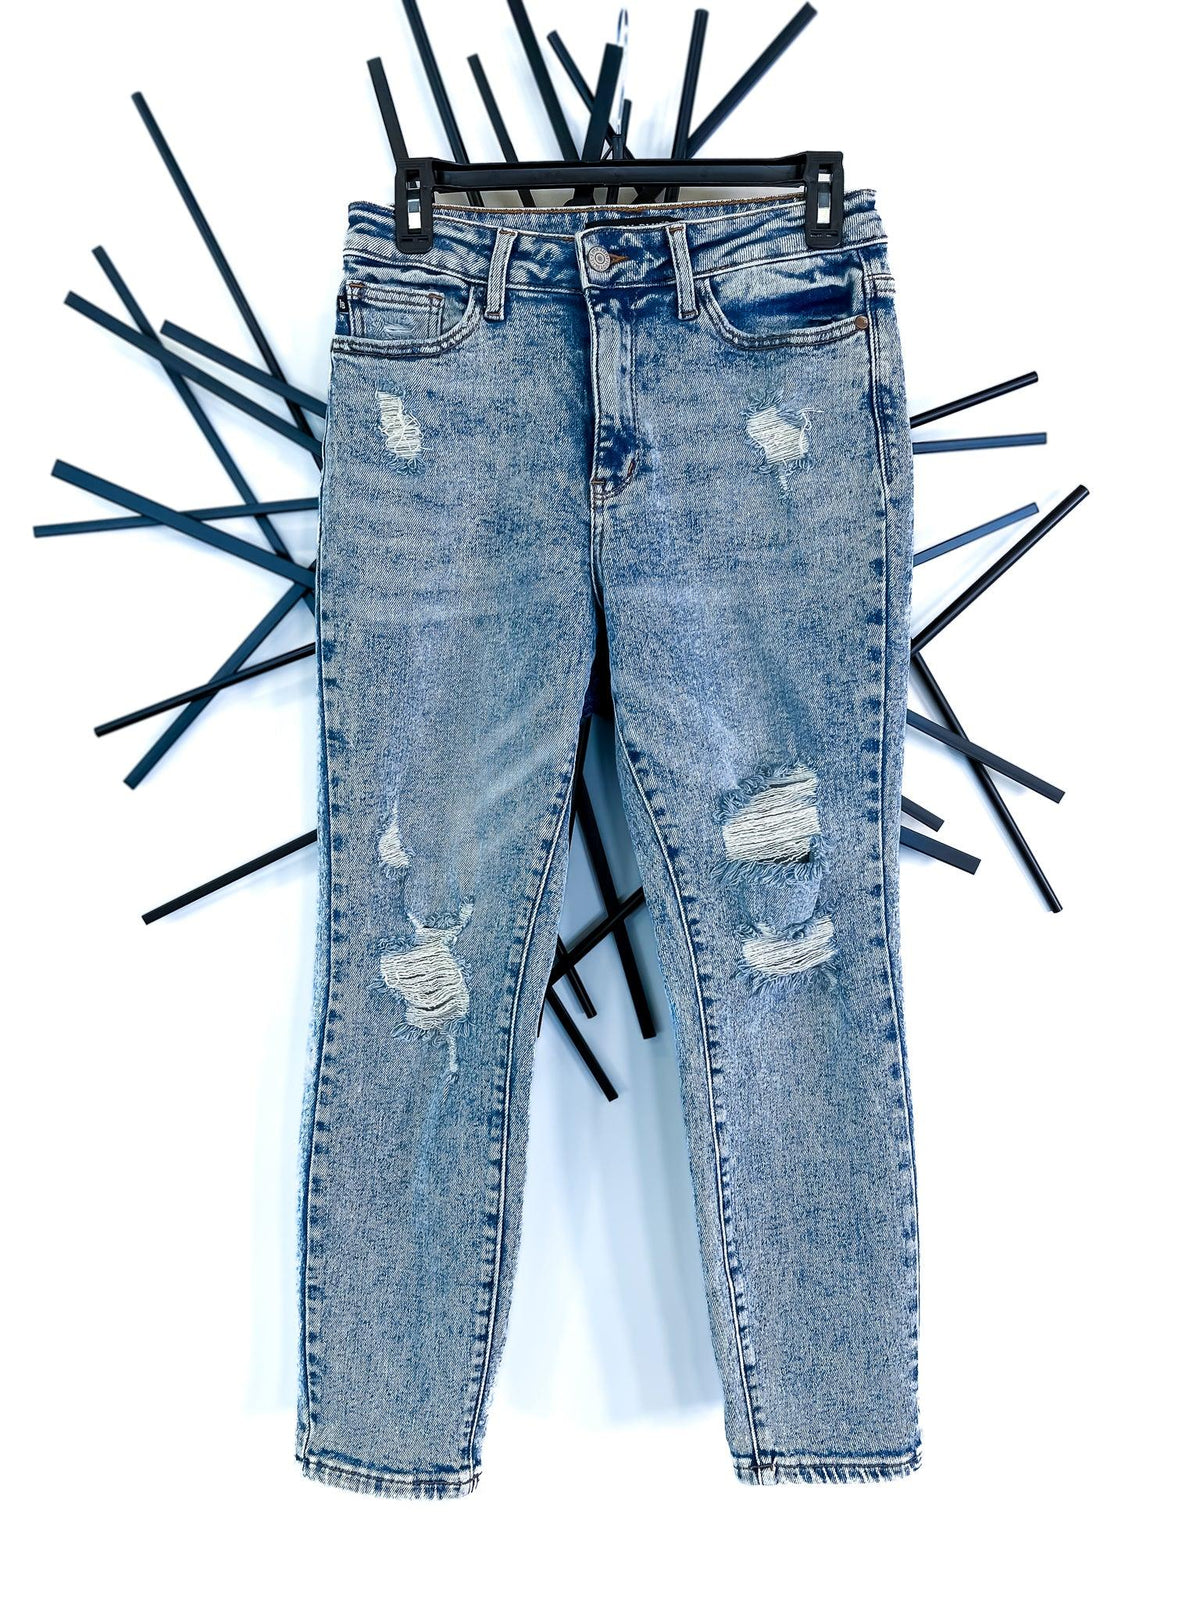 Judy Blue 88281MD Jeans - The ZigZag Stripe